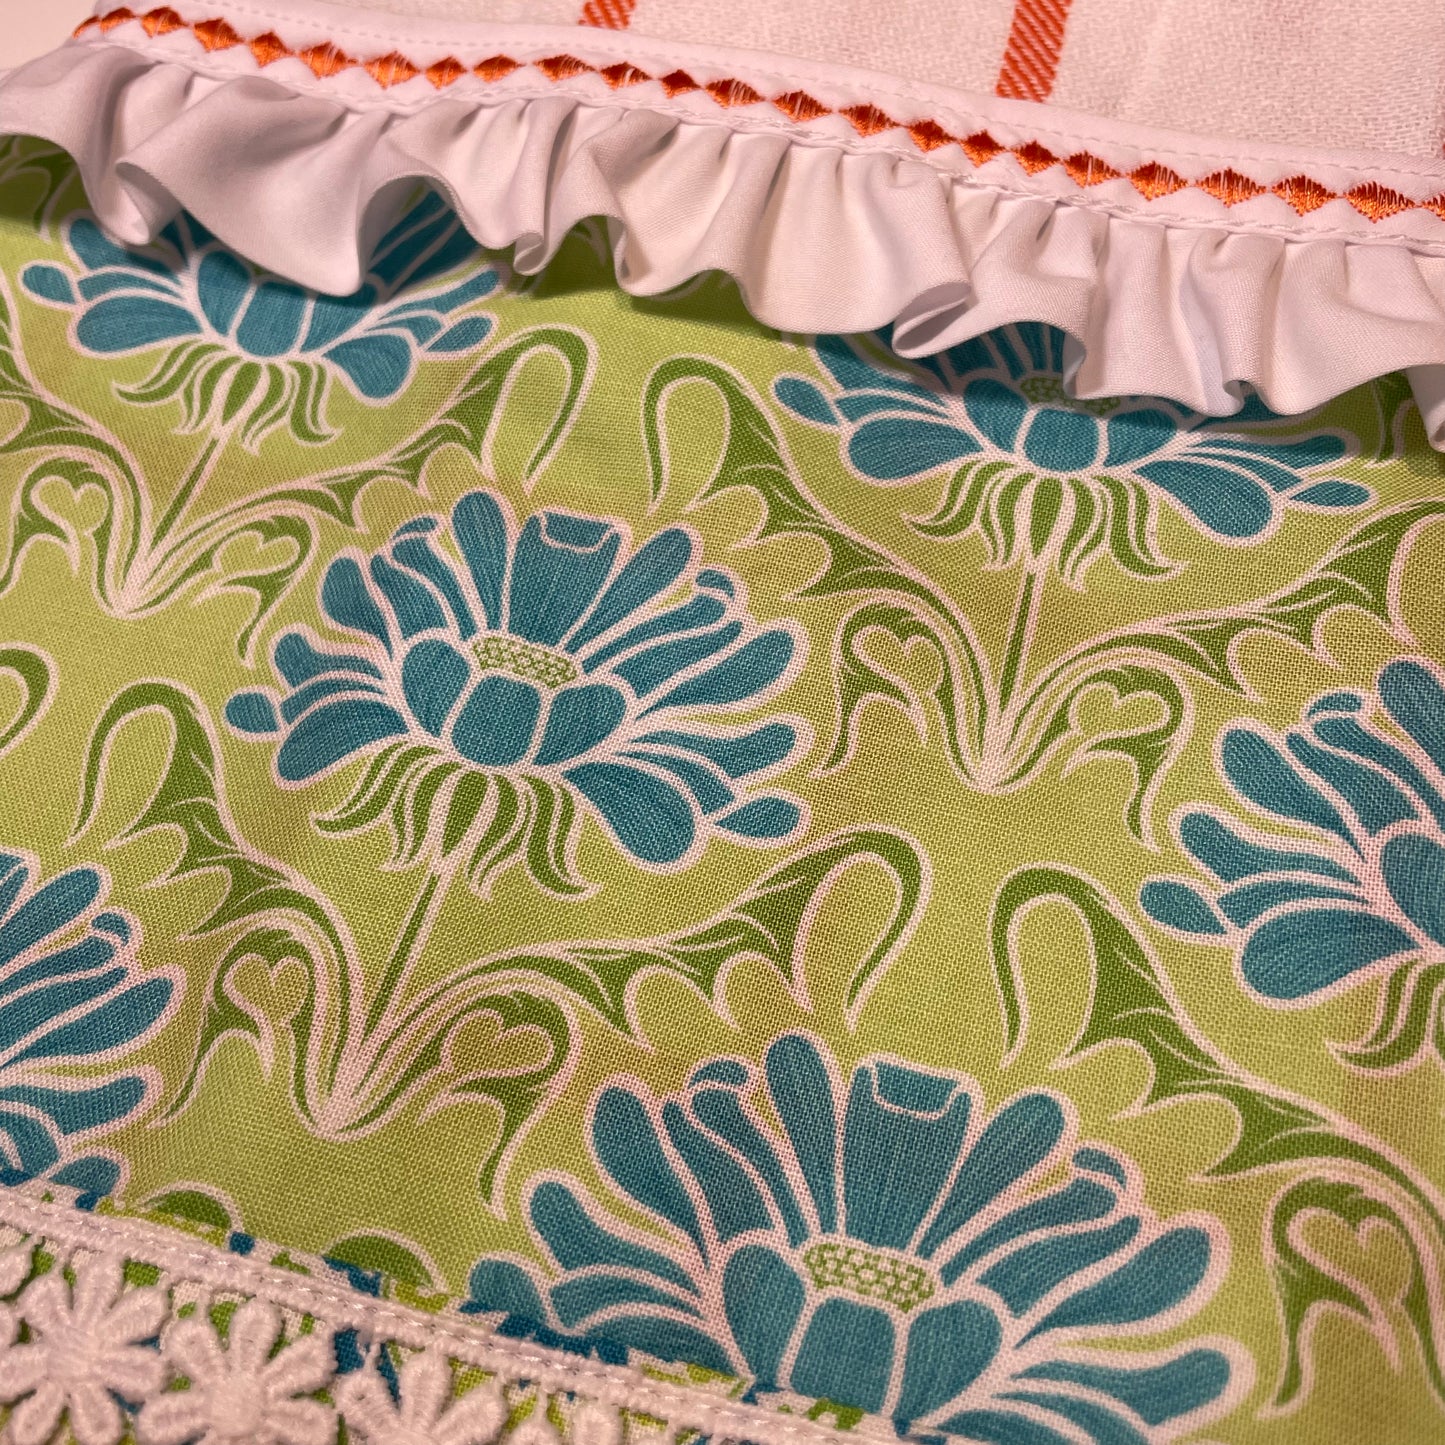 Orange and White Checked Dish Towel. Cute Decorative Tea Towel - Home Stitchery Decor